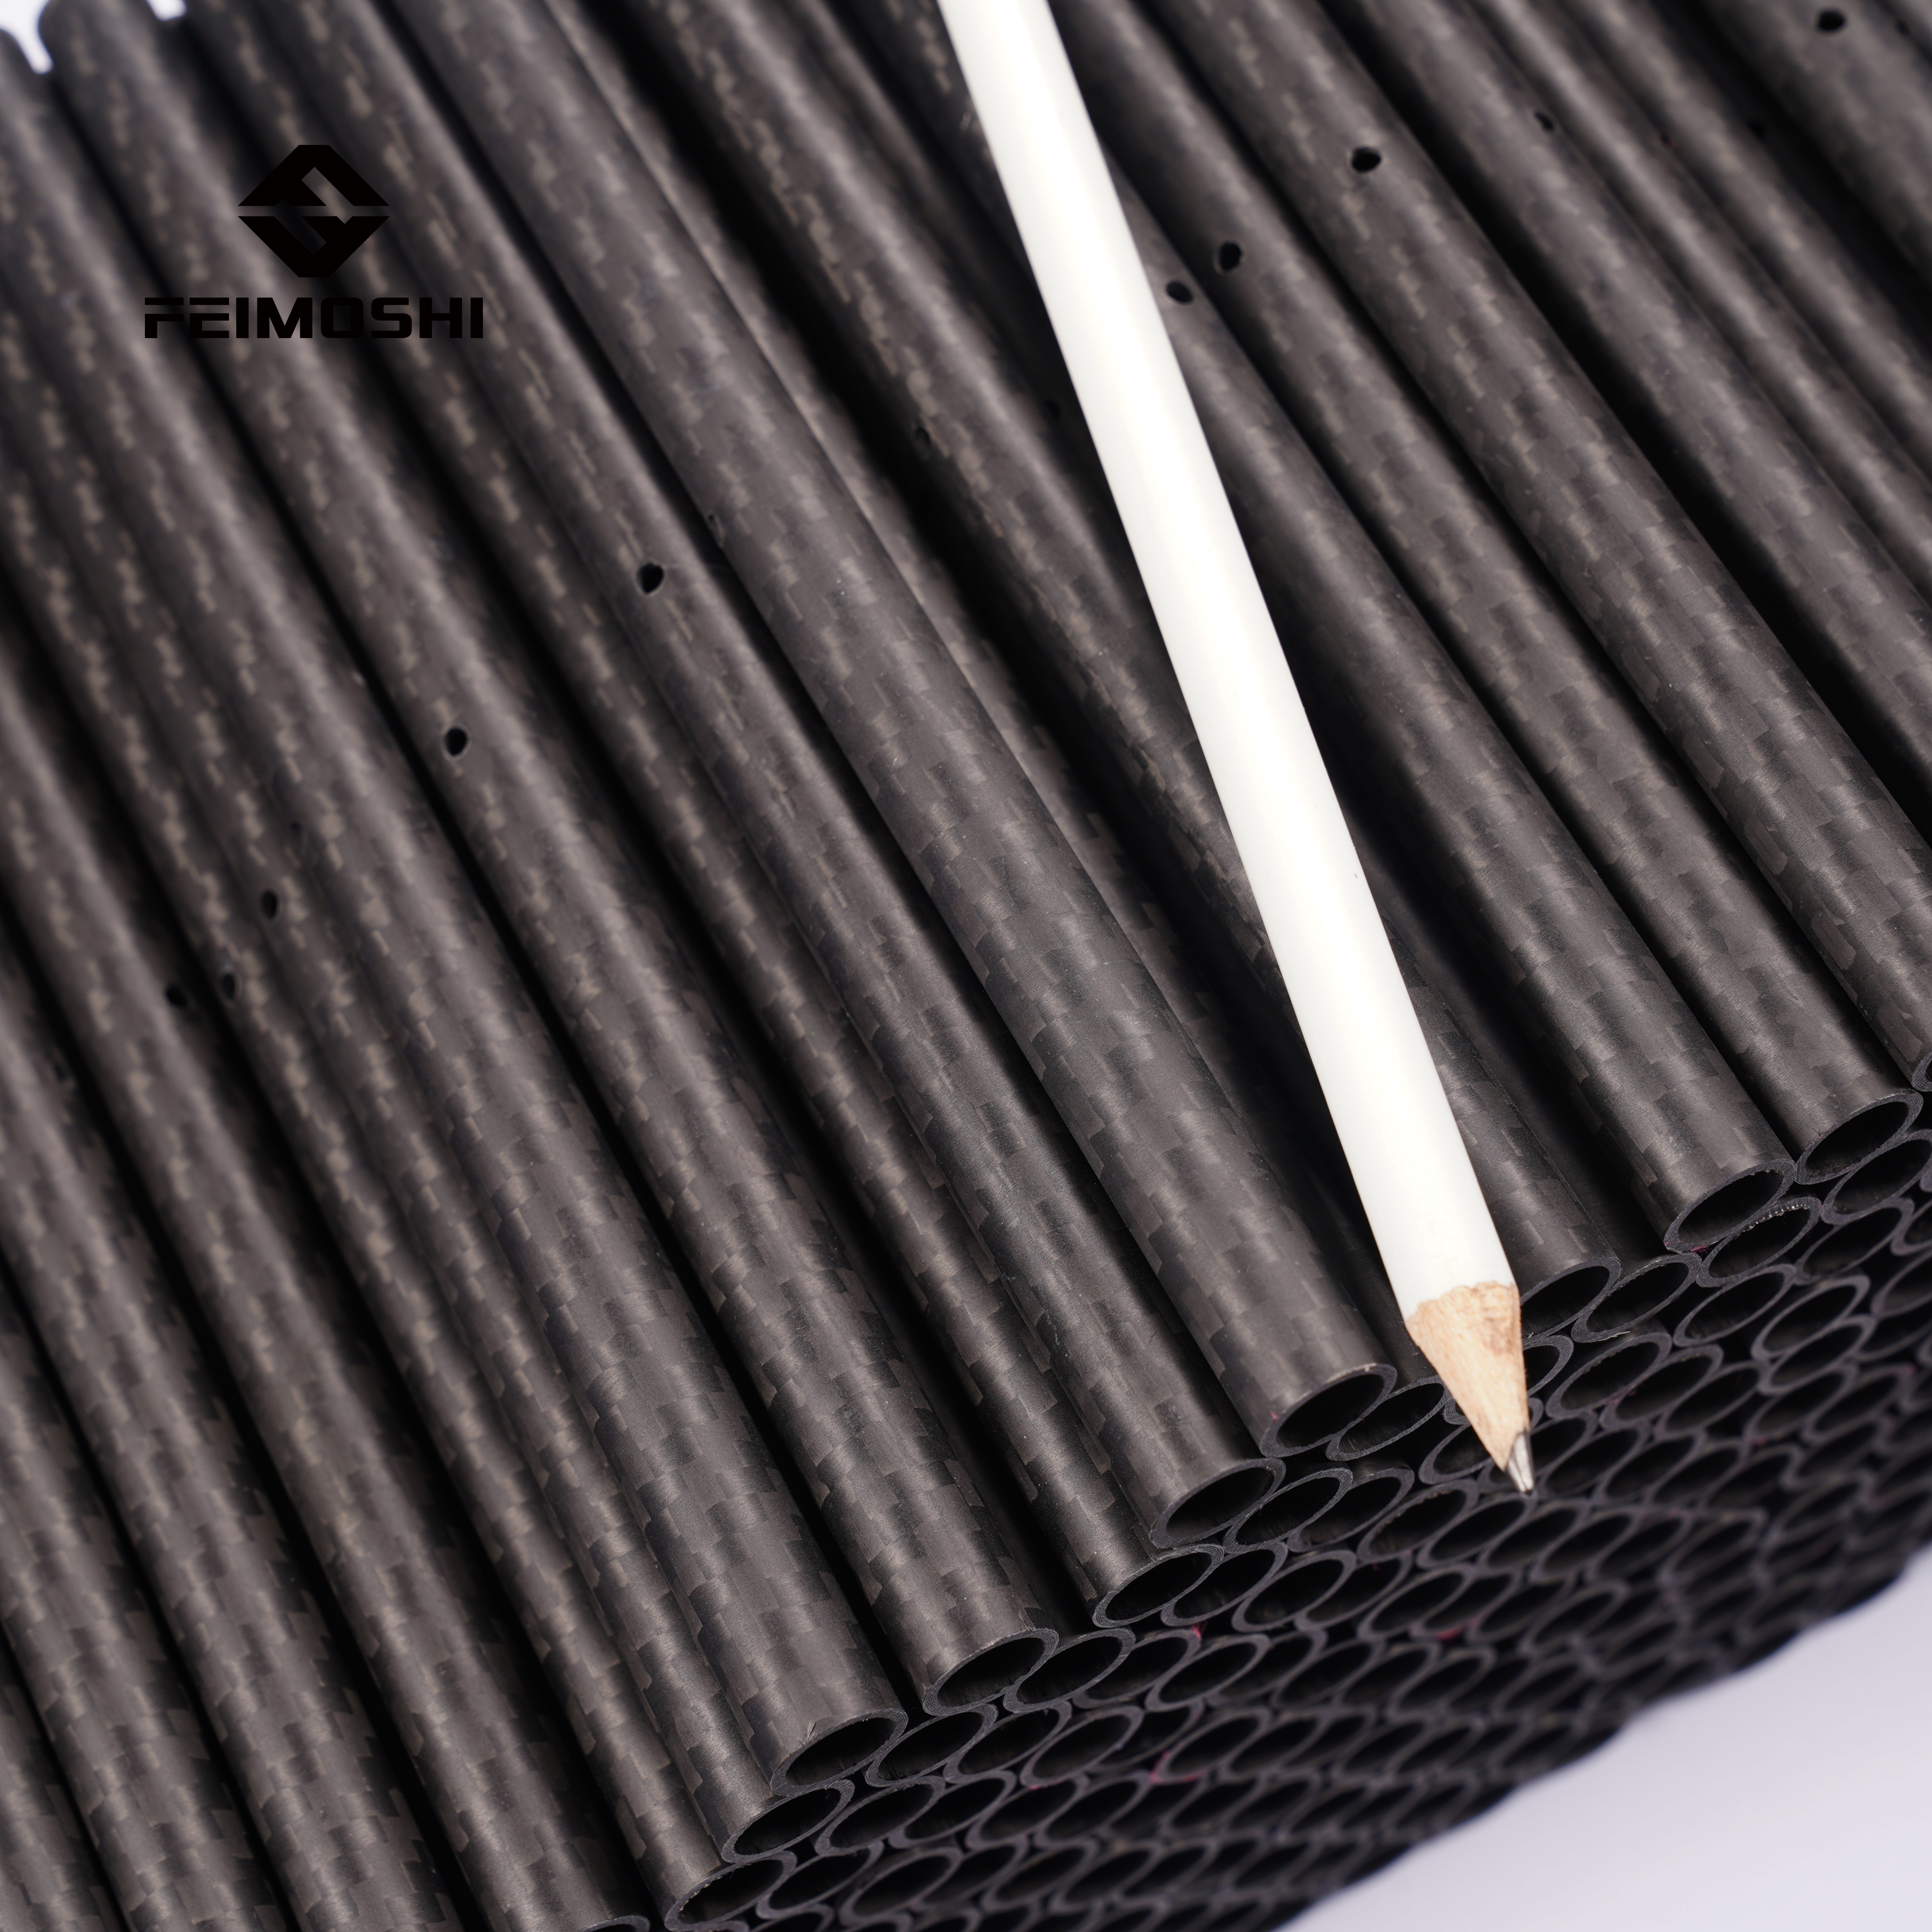 Chinese Professional Hexagon Carbon Fiber Tube - Roll-Wrapped 100% carbon fiber tube/boom/pipe 6mm-150mm diameter – Feimoshi